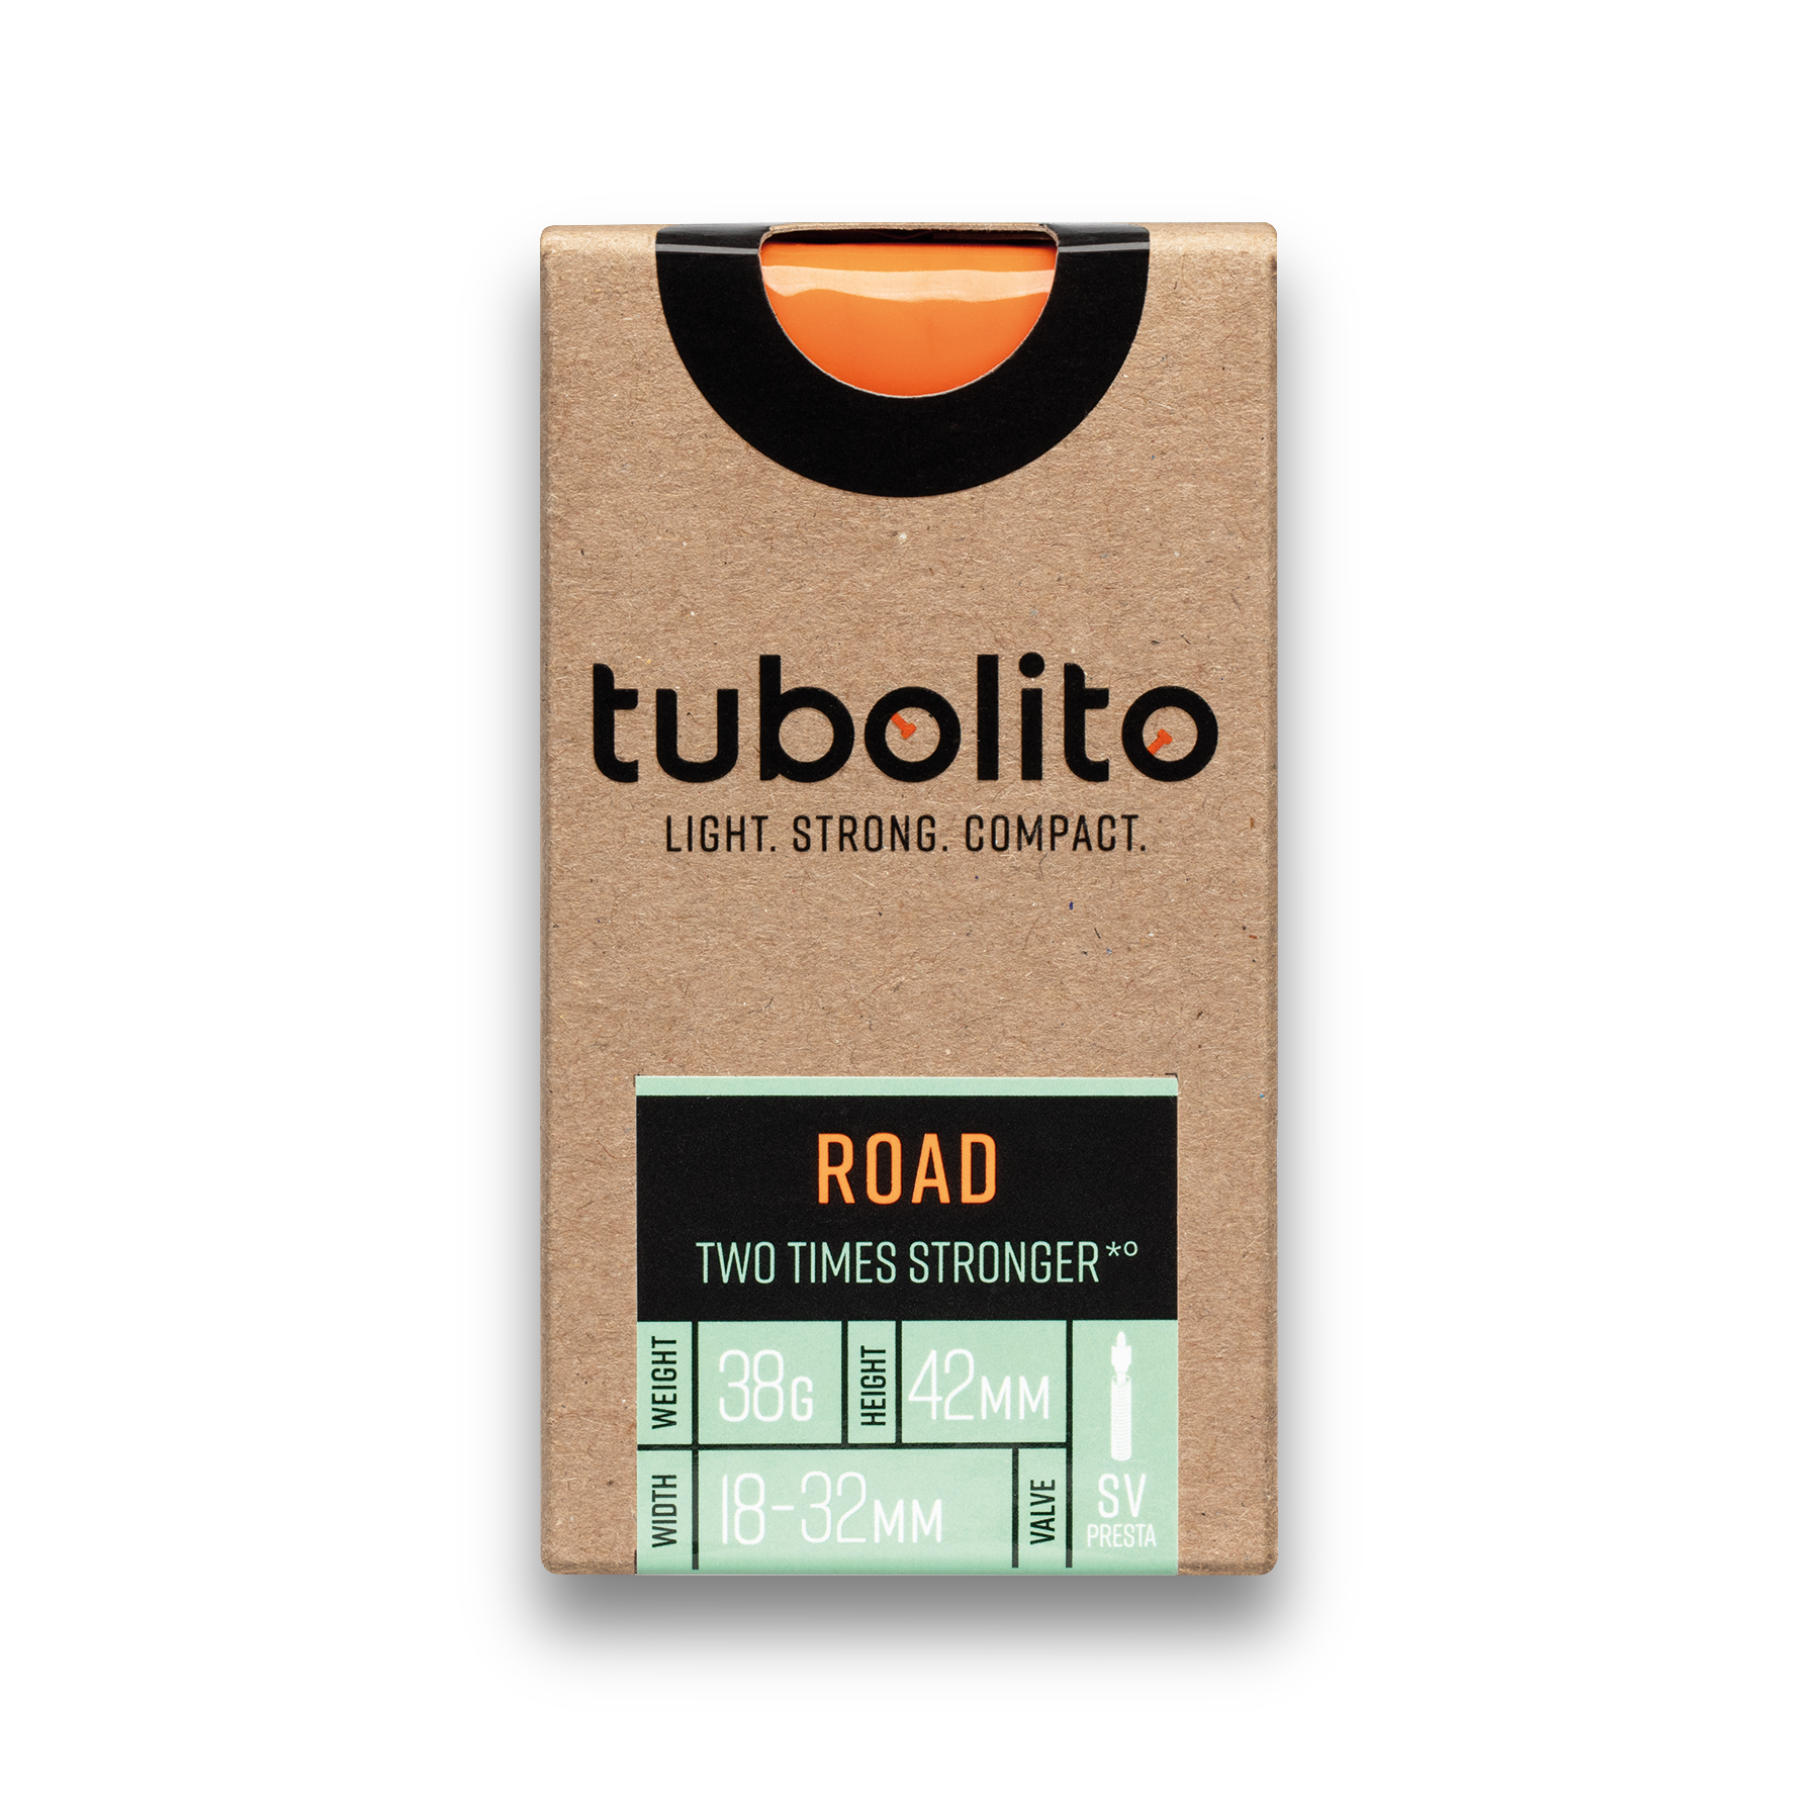 Tubo-ROAD - Tubolito